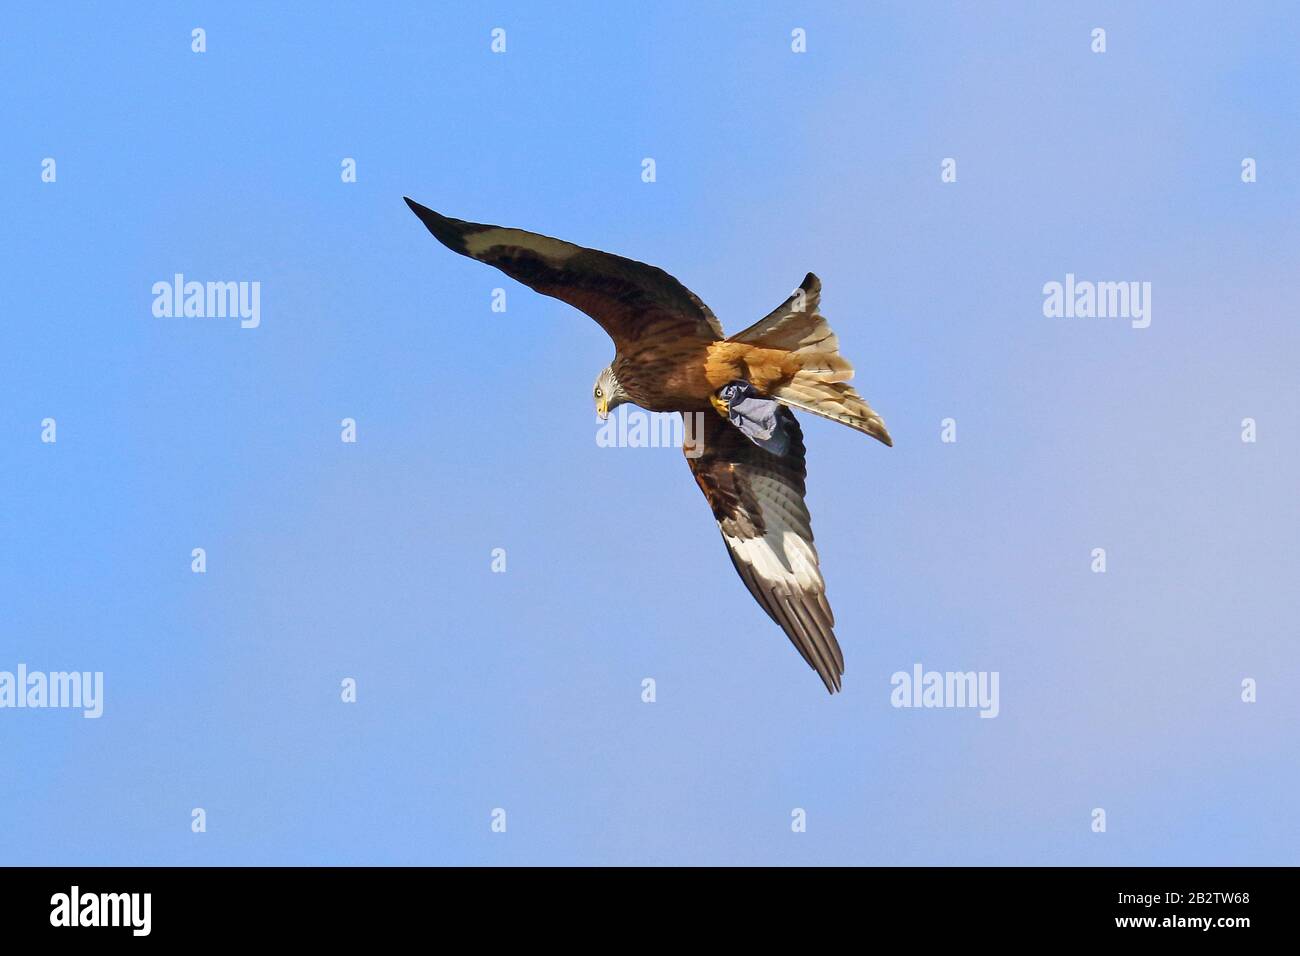 Red kite (milvus milvus) flying overhead carrying blue cloth Stock Photo